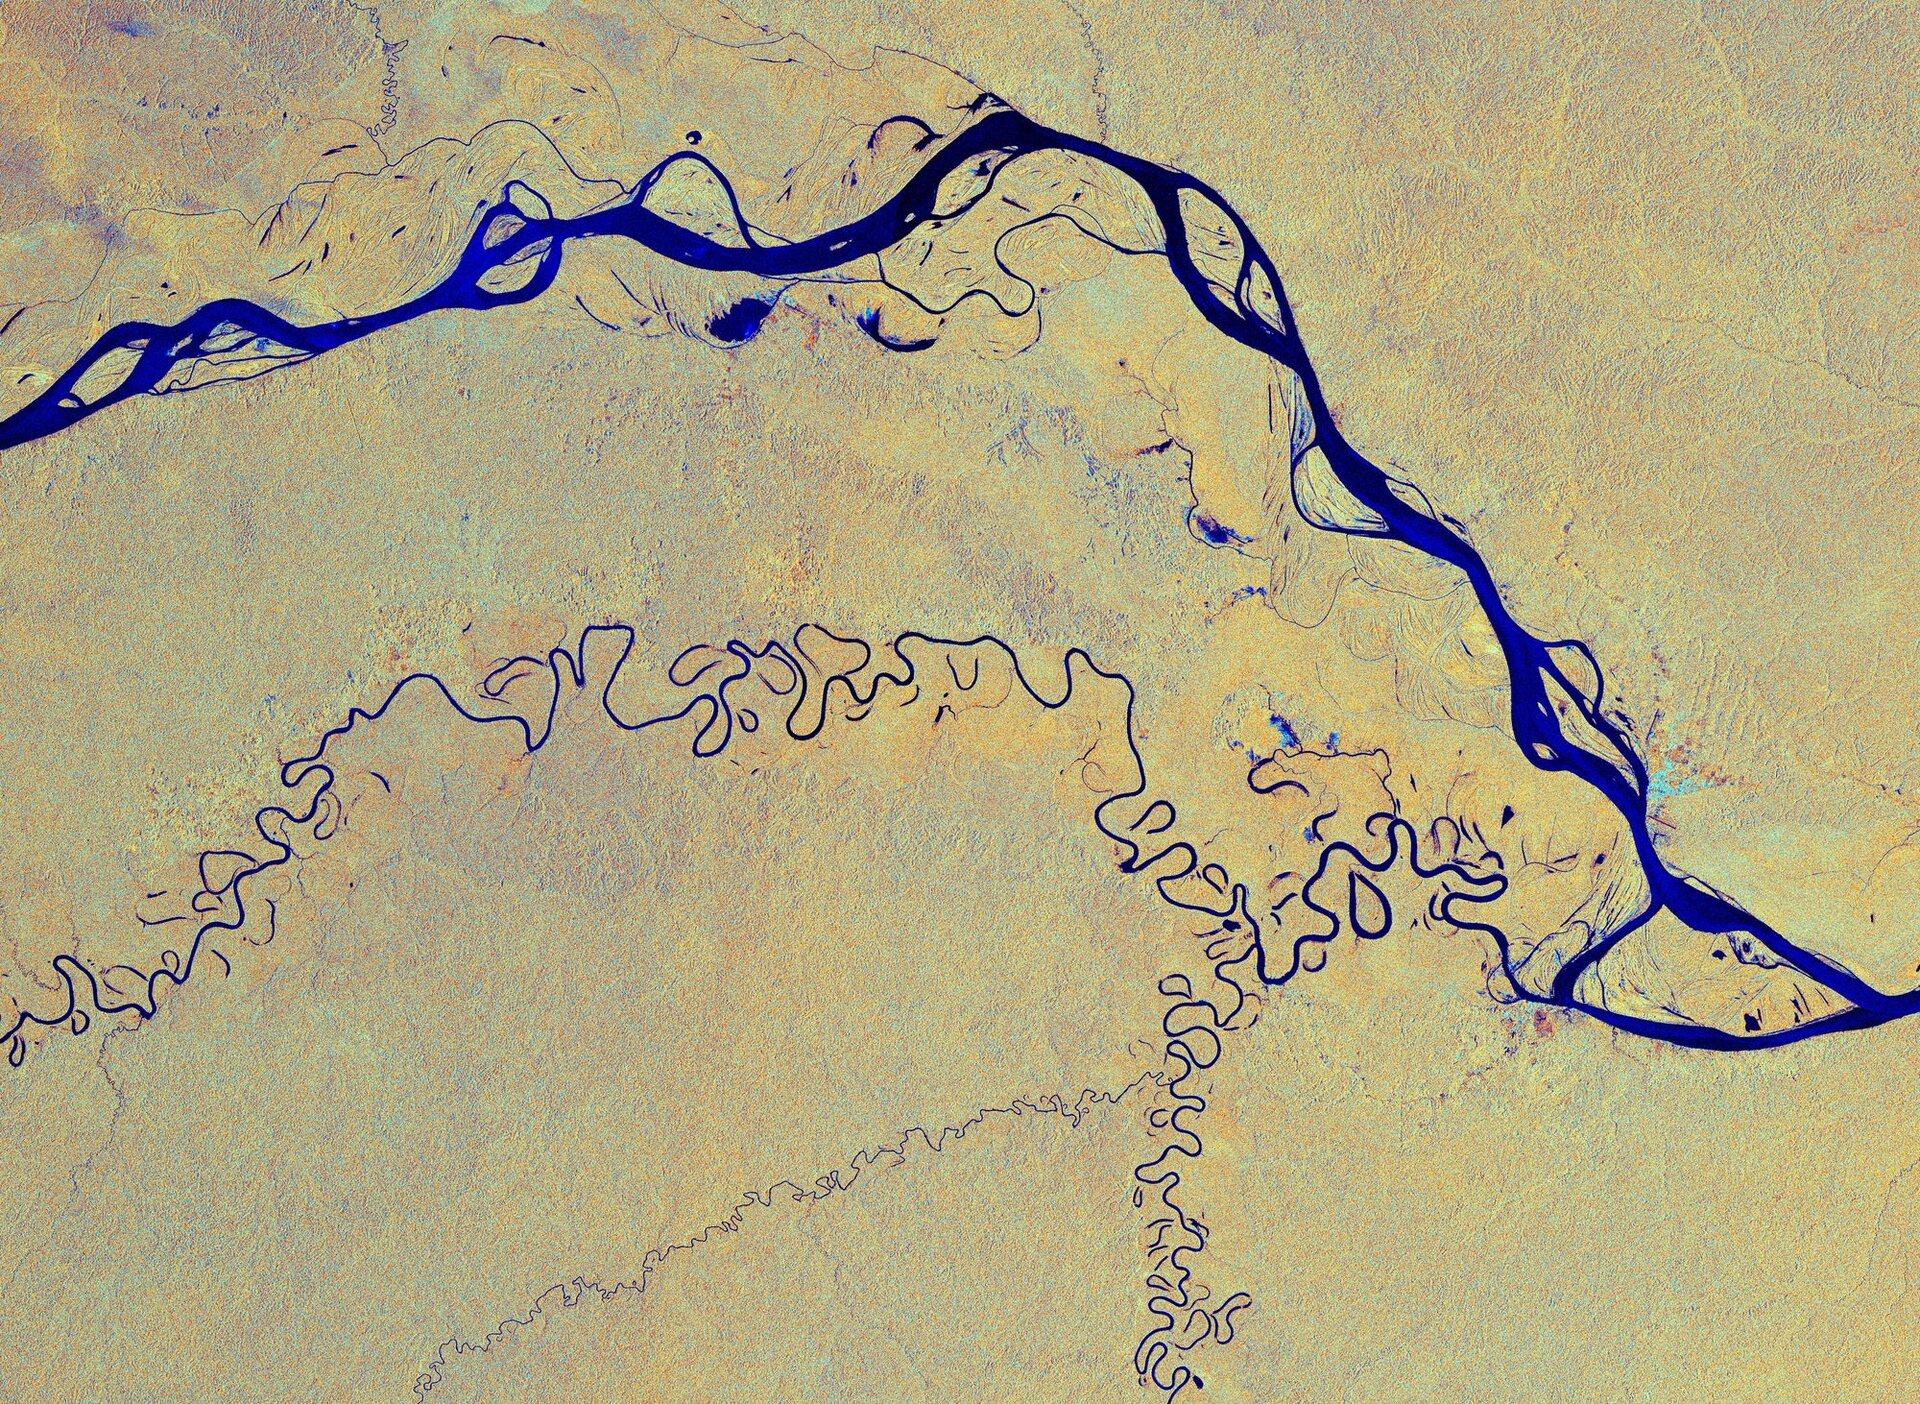 amazon river world map